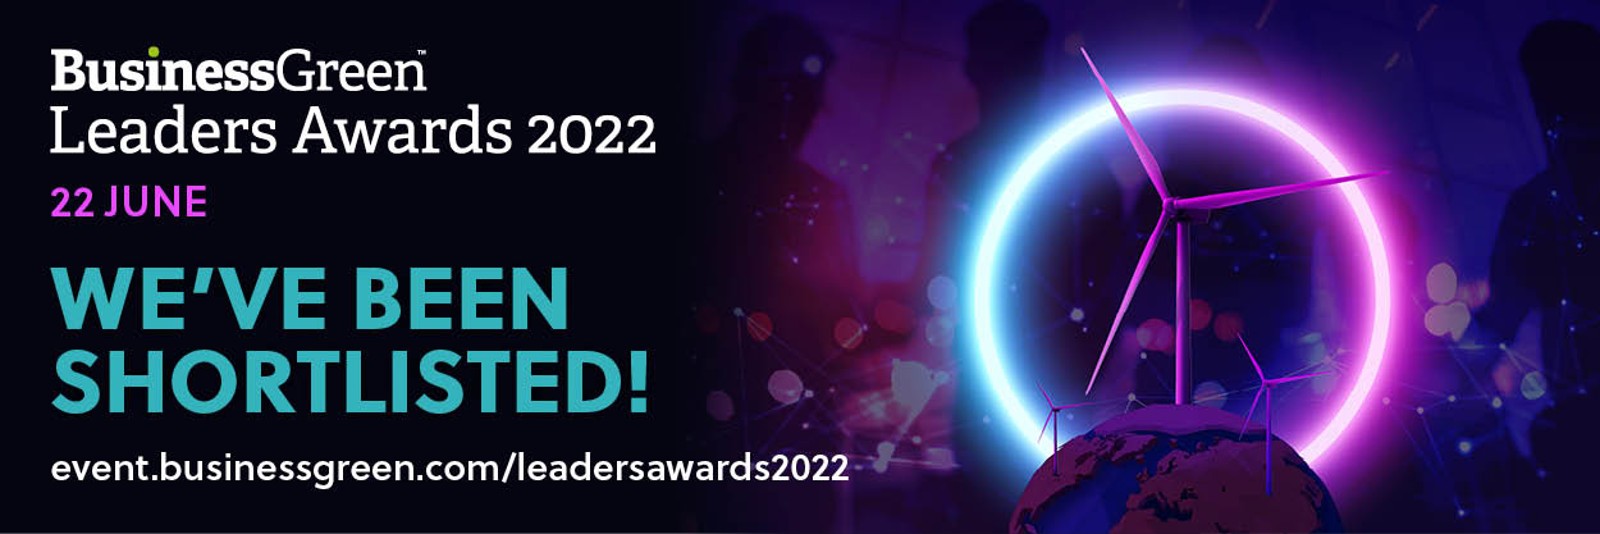 Business Green Leaders Awards 2022 Shortlist